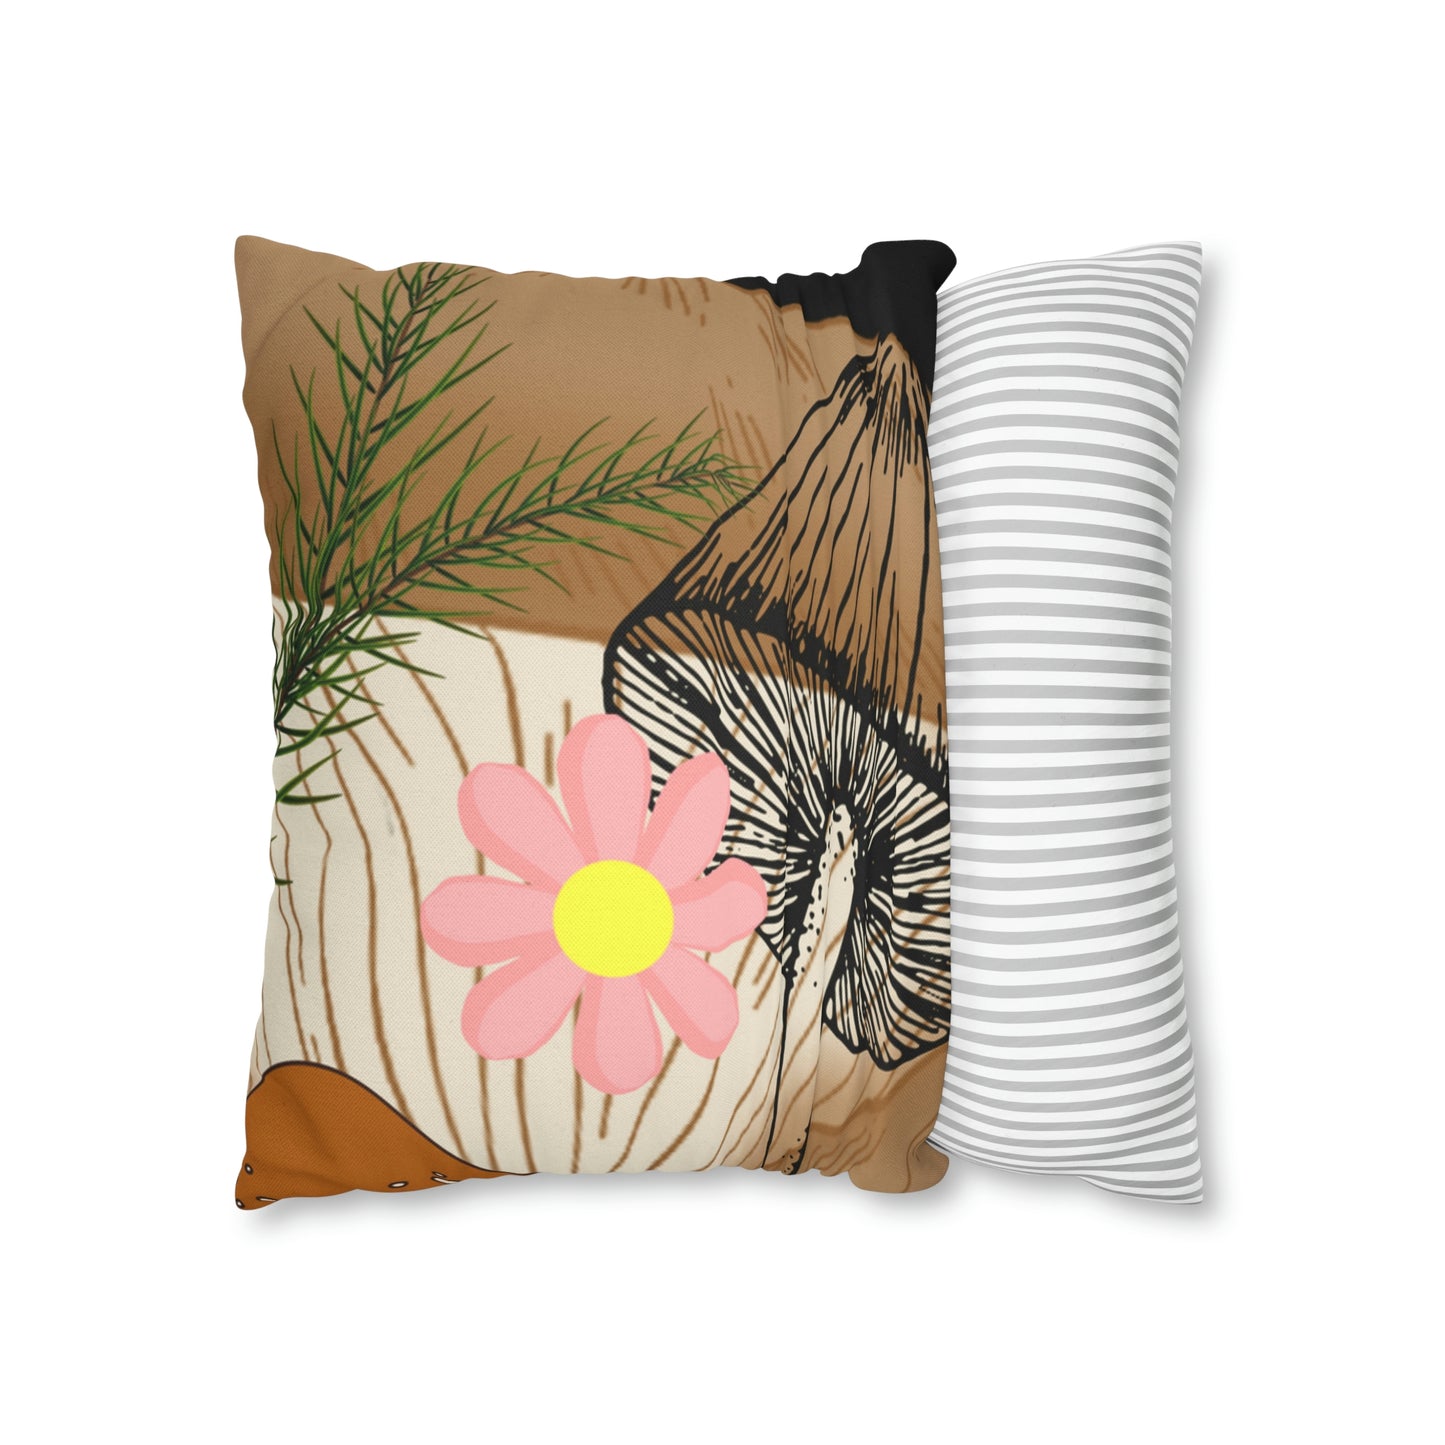 Mushroom Polyester Square Pillow | Spun Polyester Square Pillow Case | flower Playing card | Bird Décor pillow